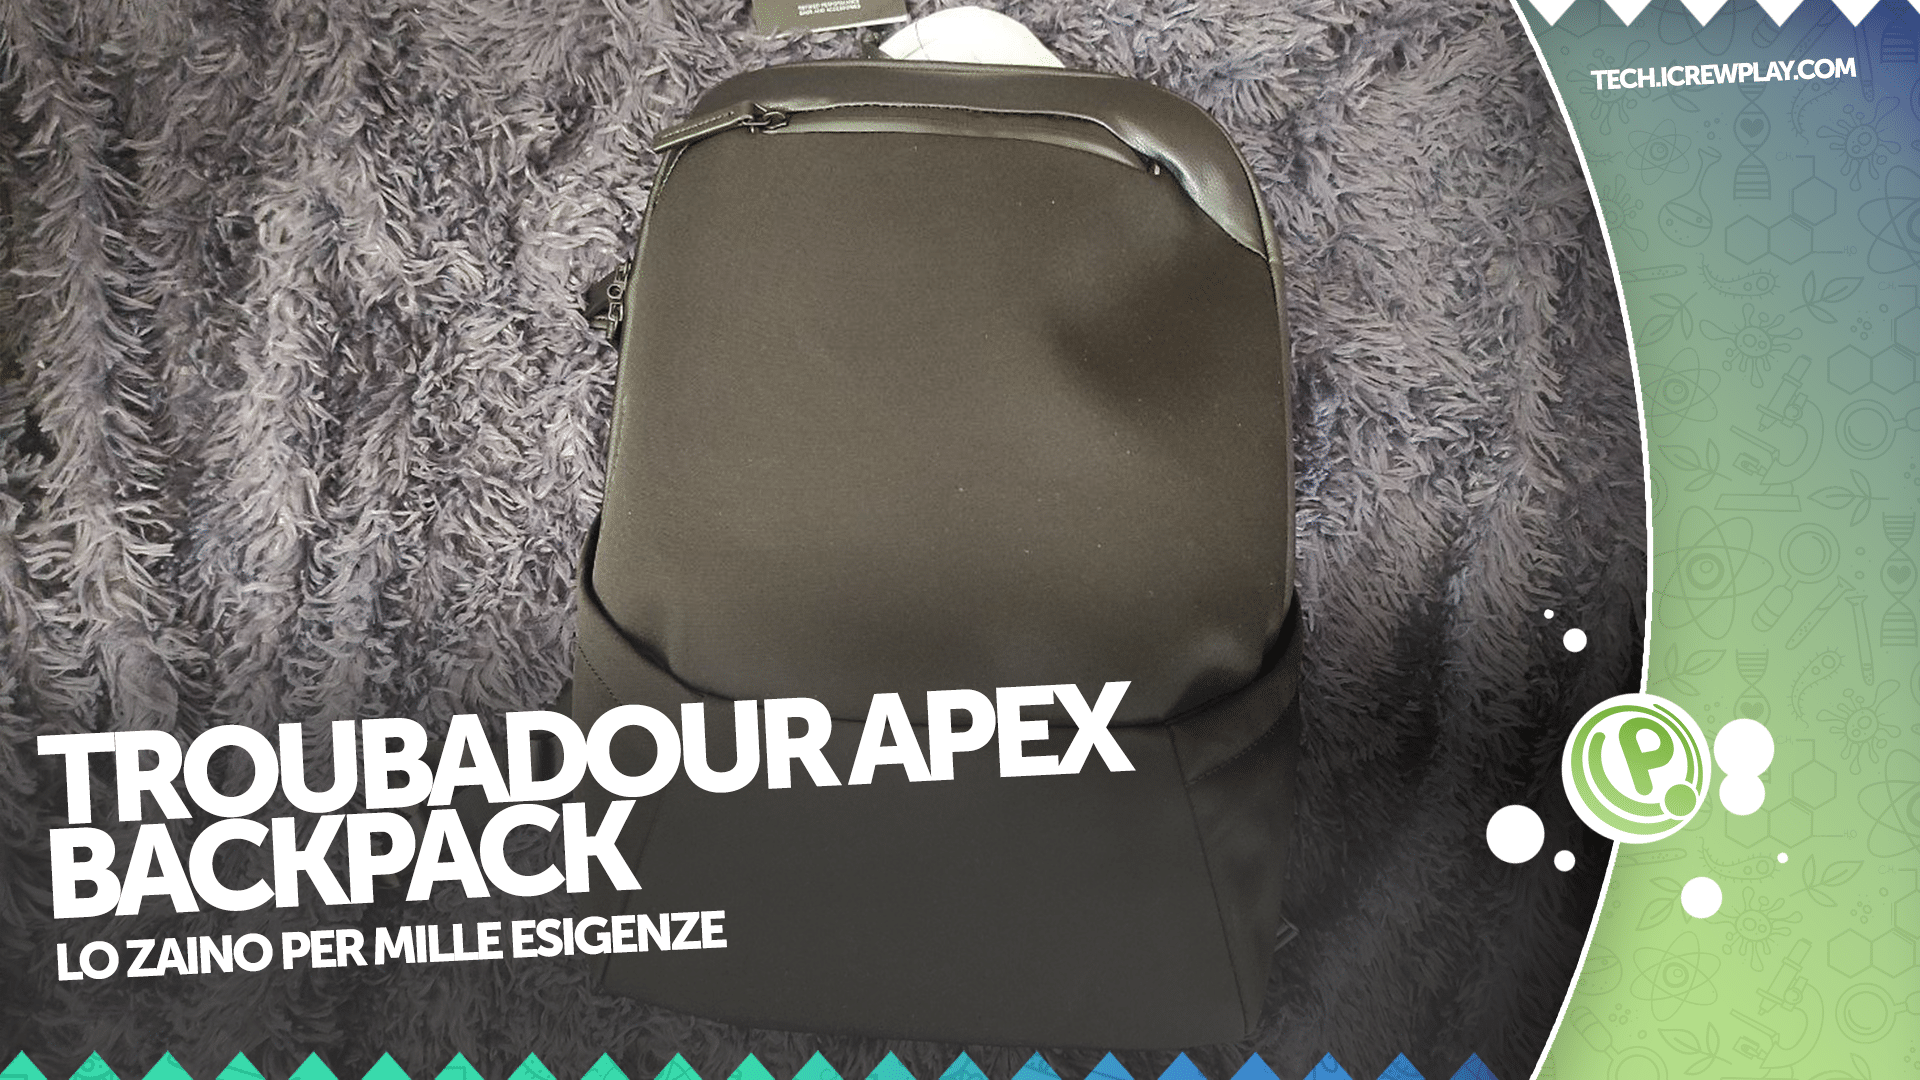 Troubadour Apex Backpack review Pledge Times